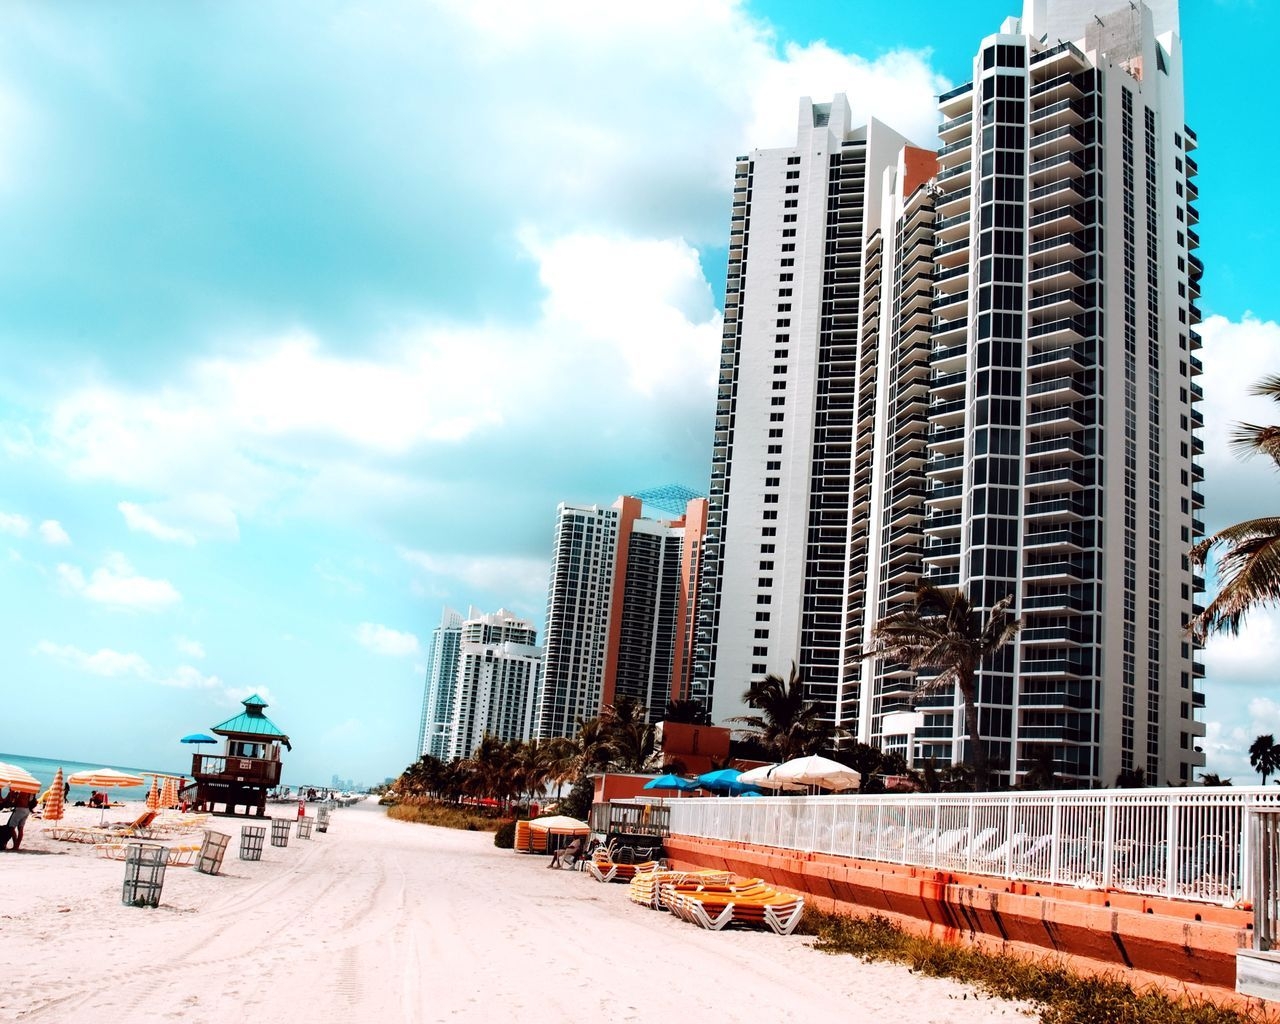 Miami for 1280 x 1024 resolution